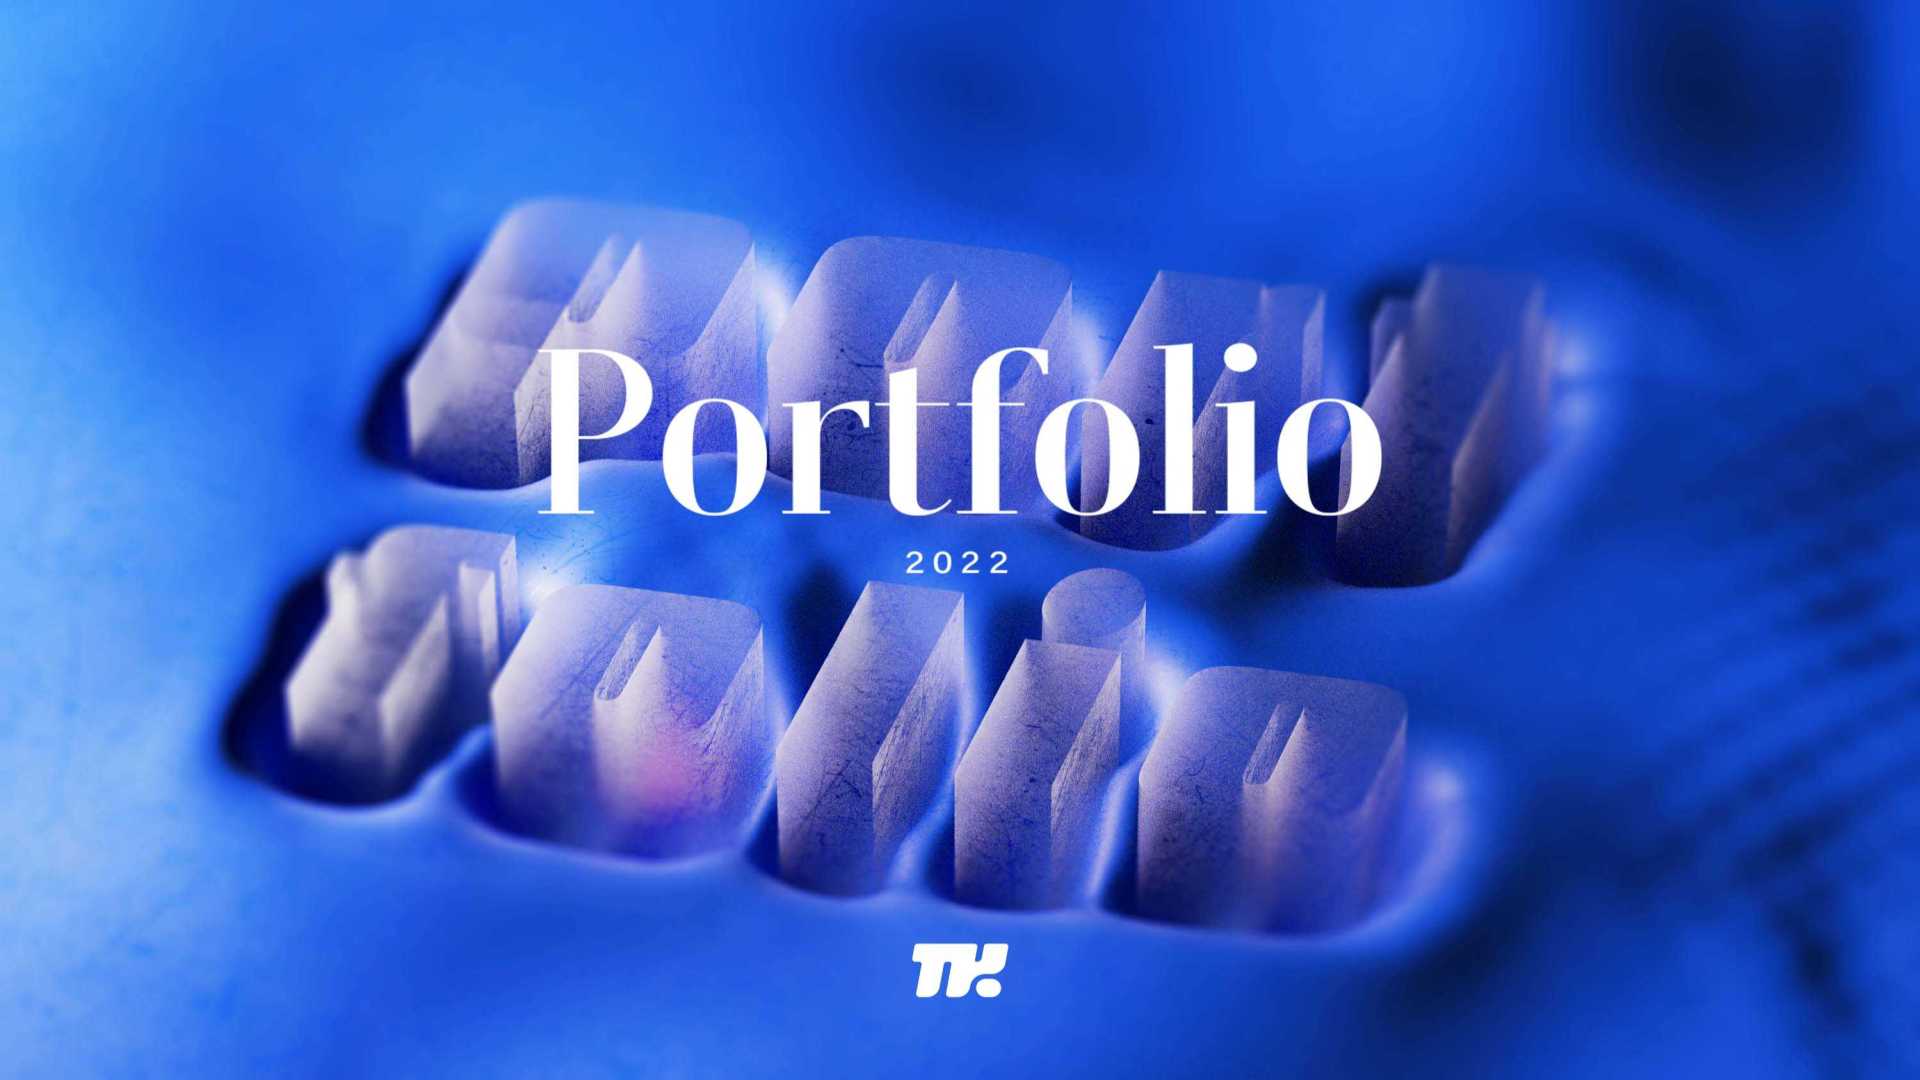 think‘s Portfolio 2022